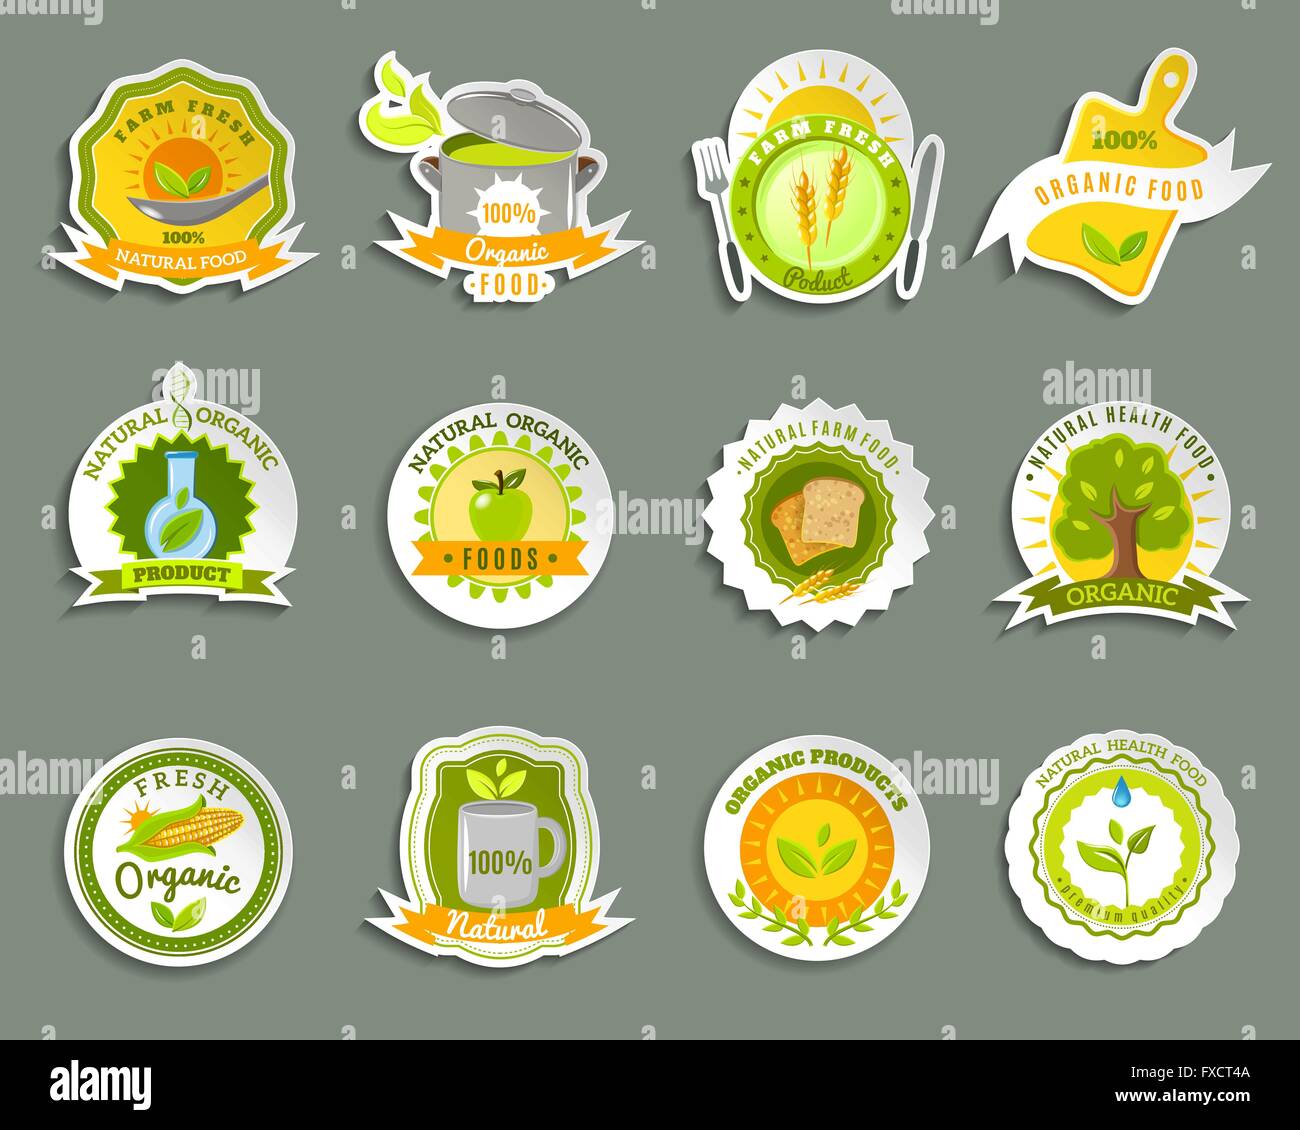 Natürliche Bio-Lebensmittel Marken Sticker set Stock-Vektorgrafik - Alamy